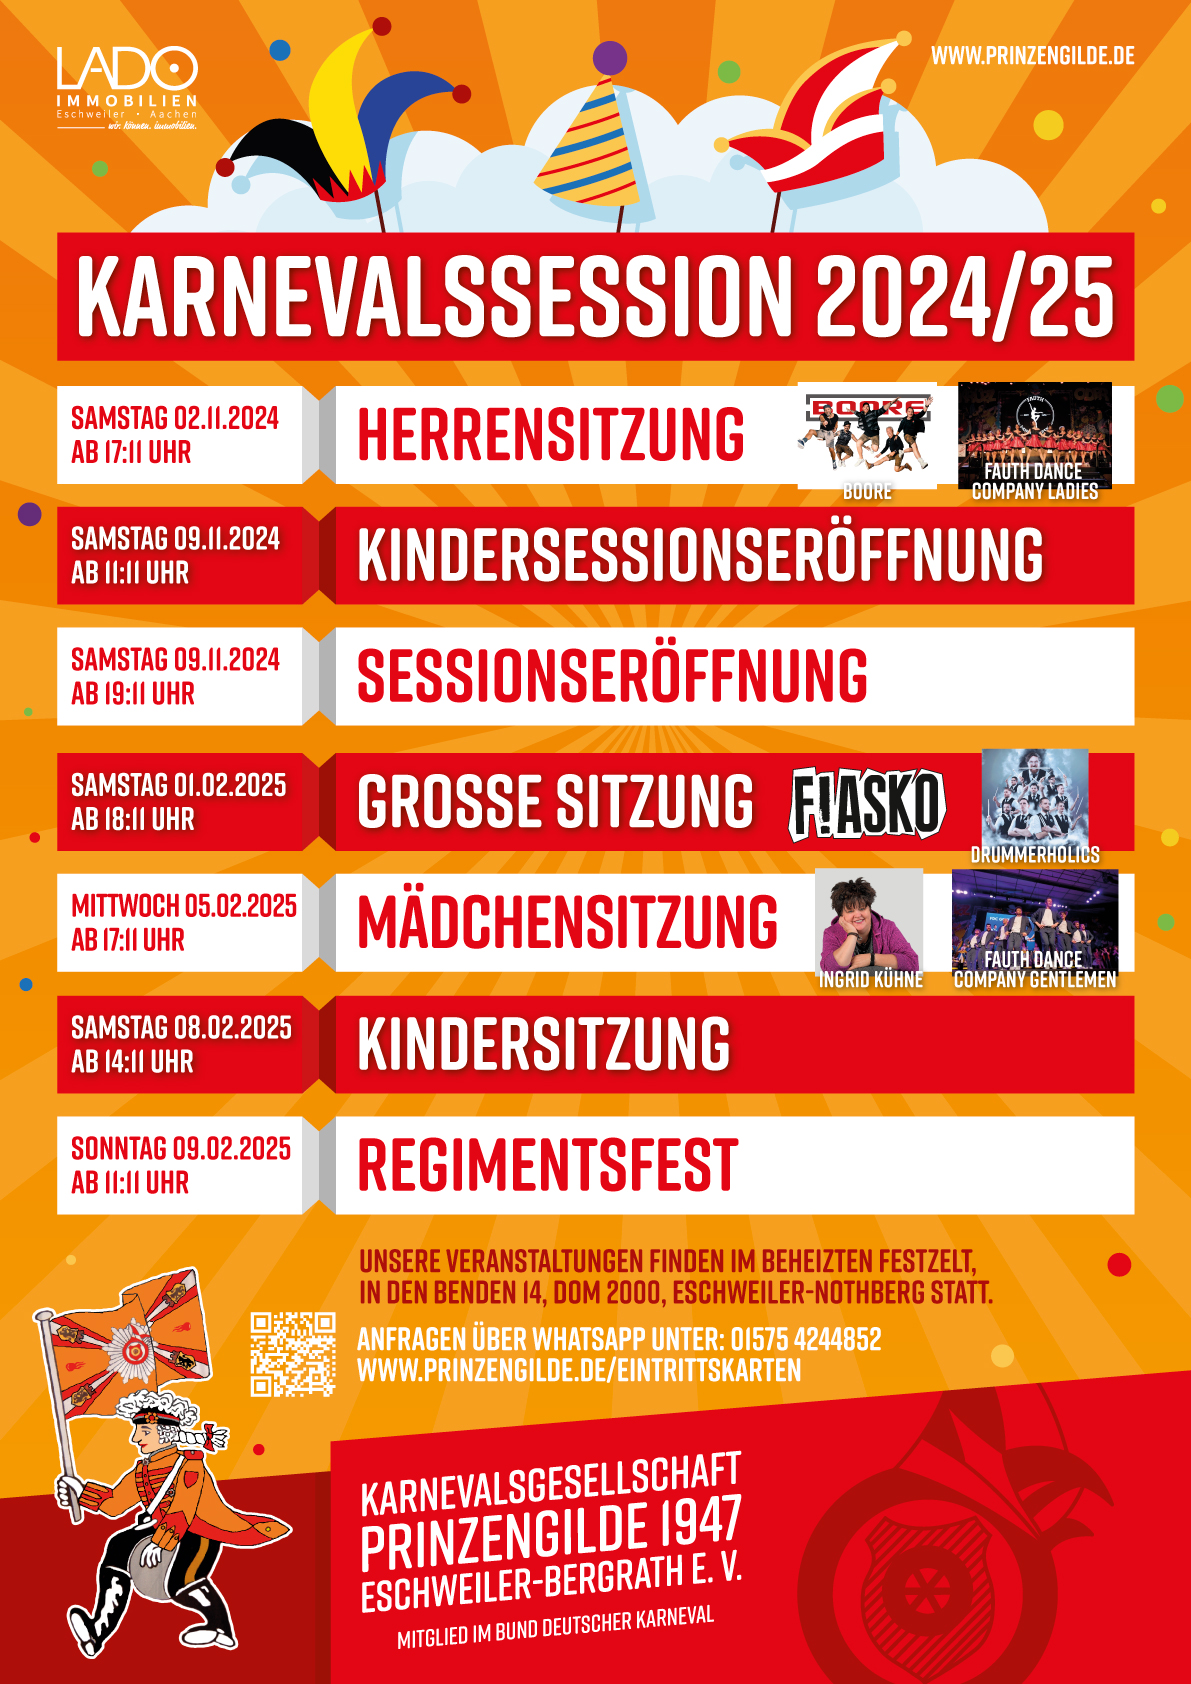 Veranstaltungen Karnevalsgesellschaft Prinzengilde 1947 Eschweiler-Bergrath e. V. | Session 2024/2025